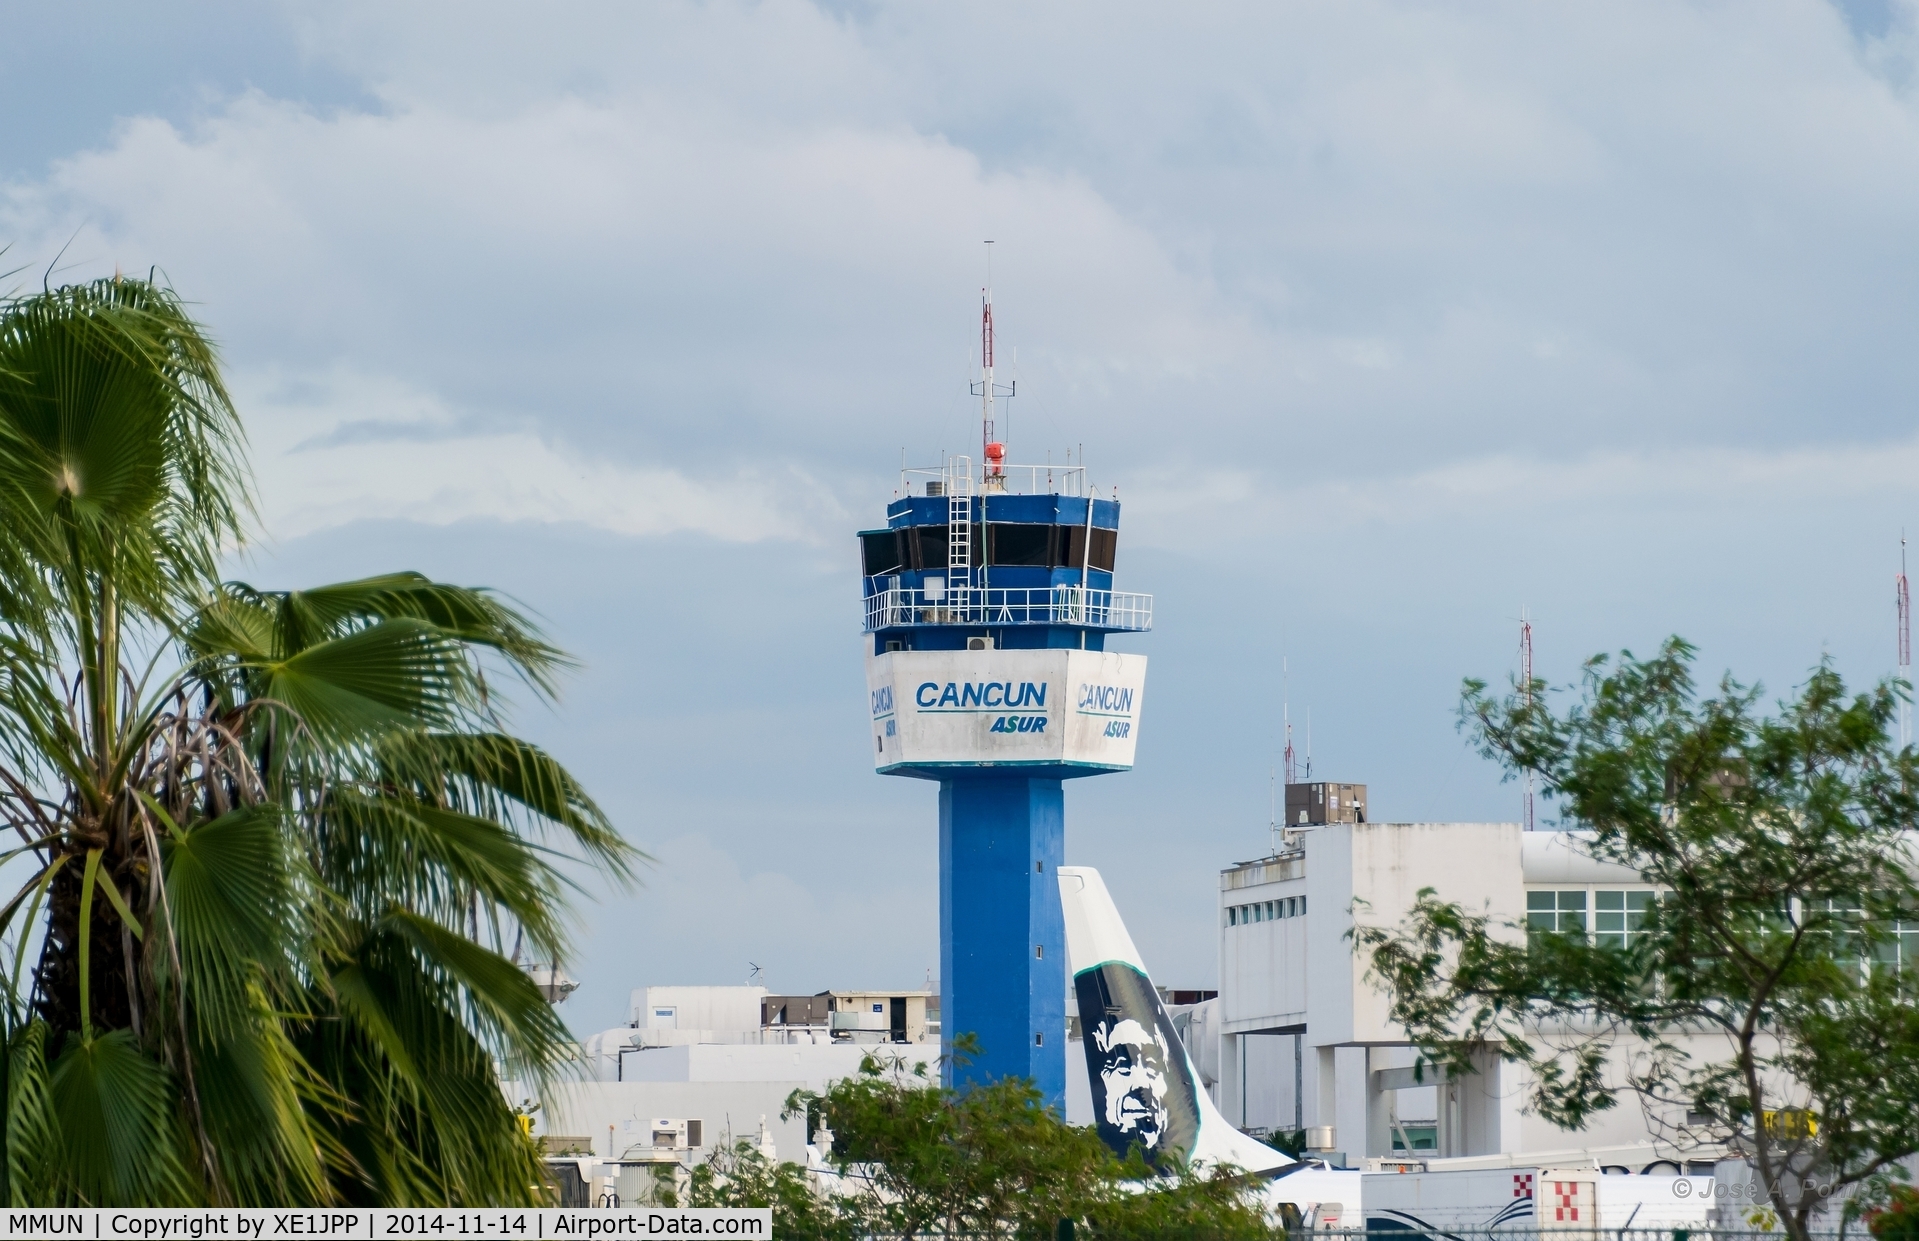 Cancún International Airport, Cancún, Quintana Roo Mexico (MMUN) - Cancun International Airport